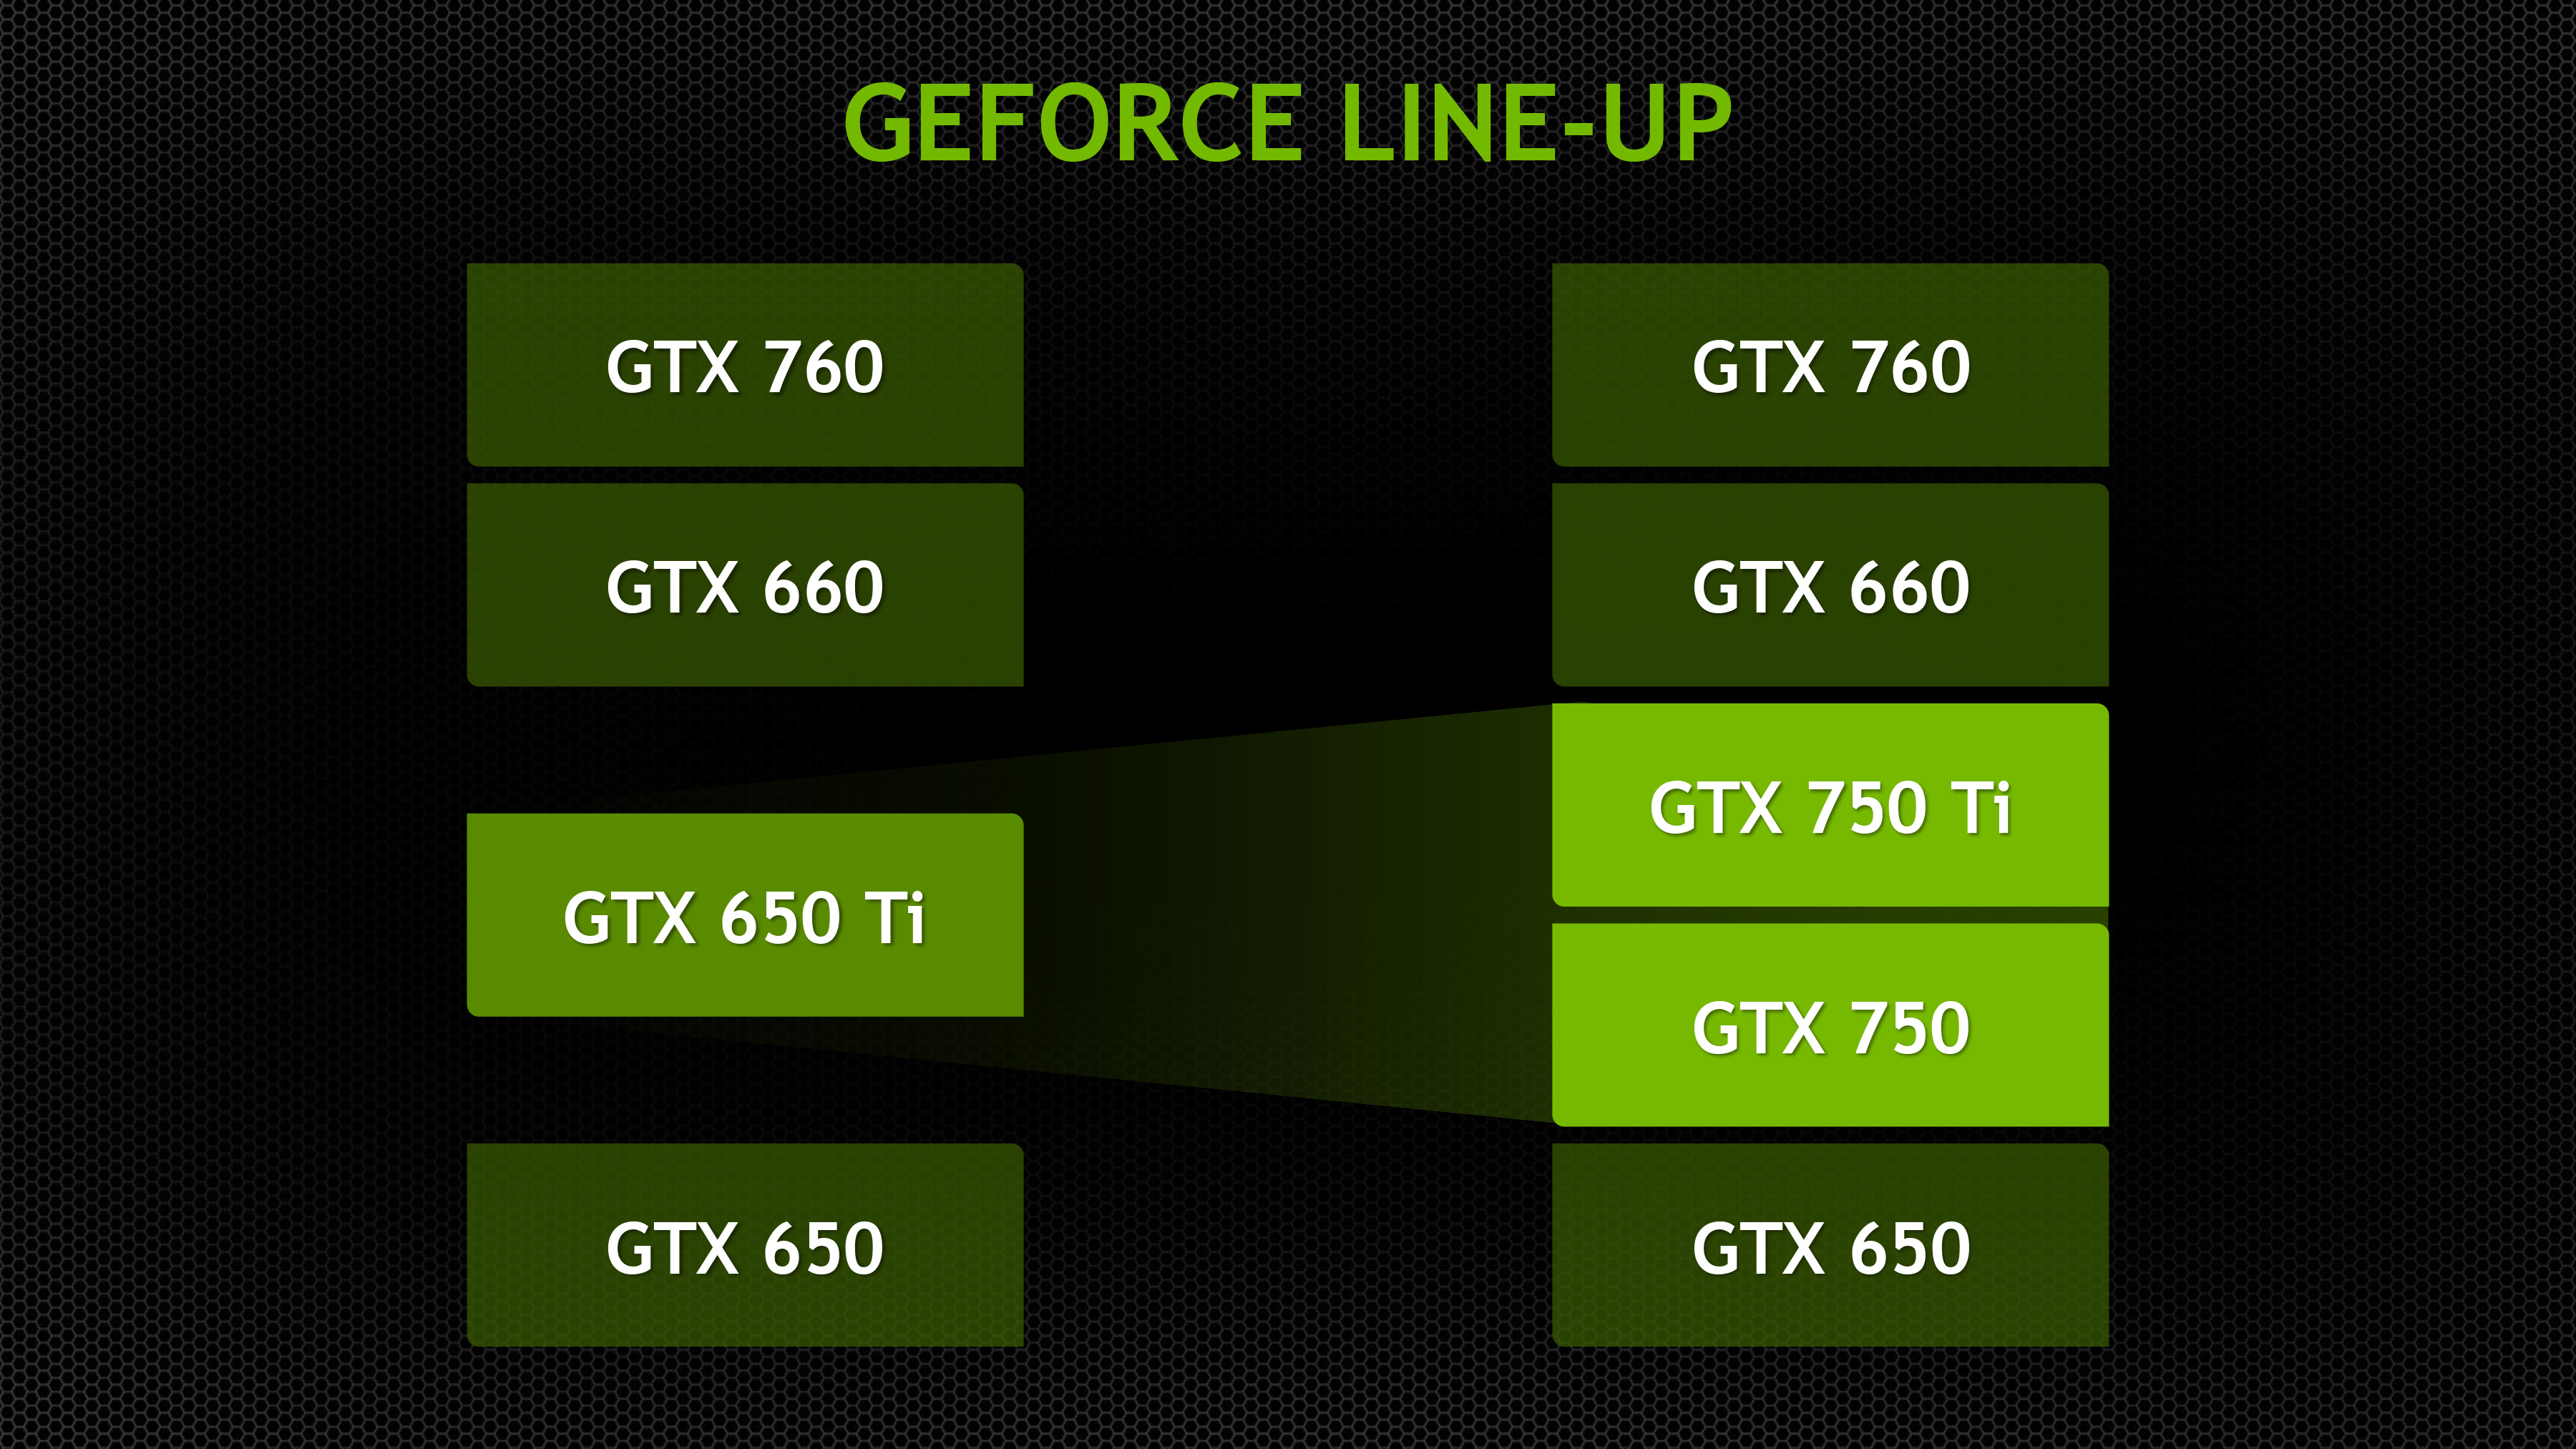 The NVIDIA GeForce GTX 750 Ti and GTX 